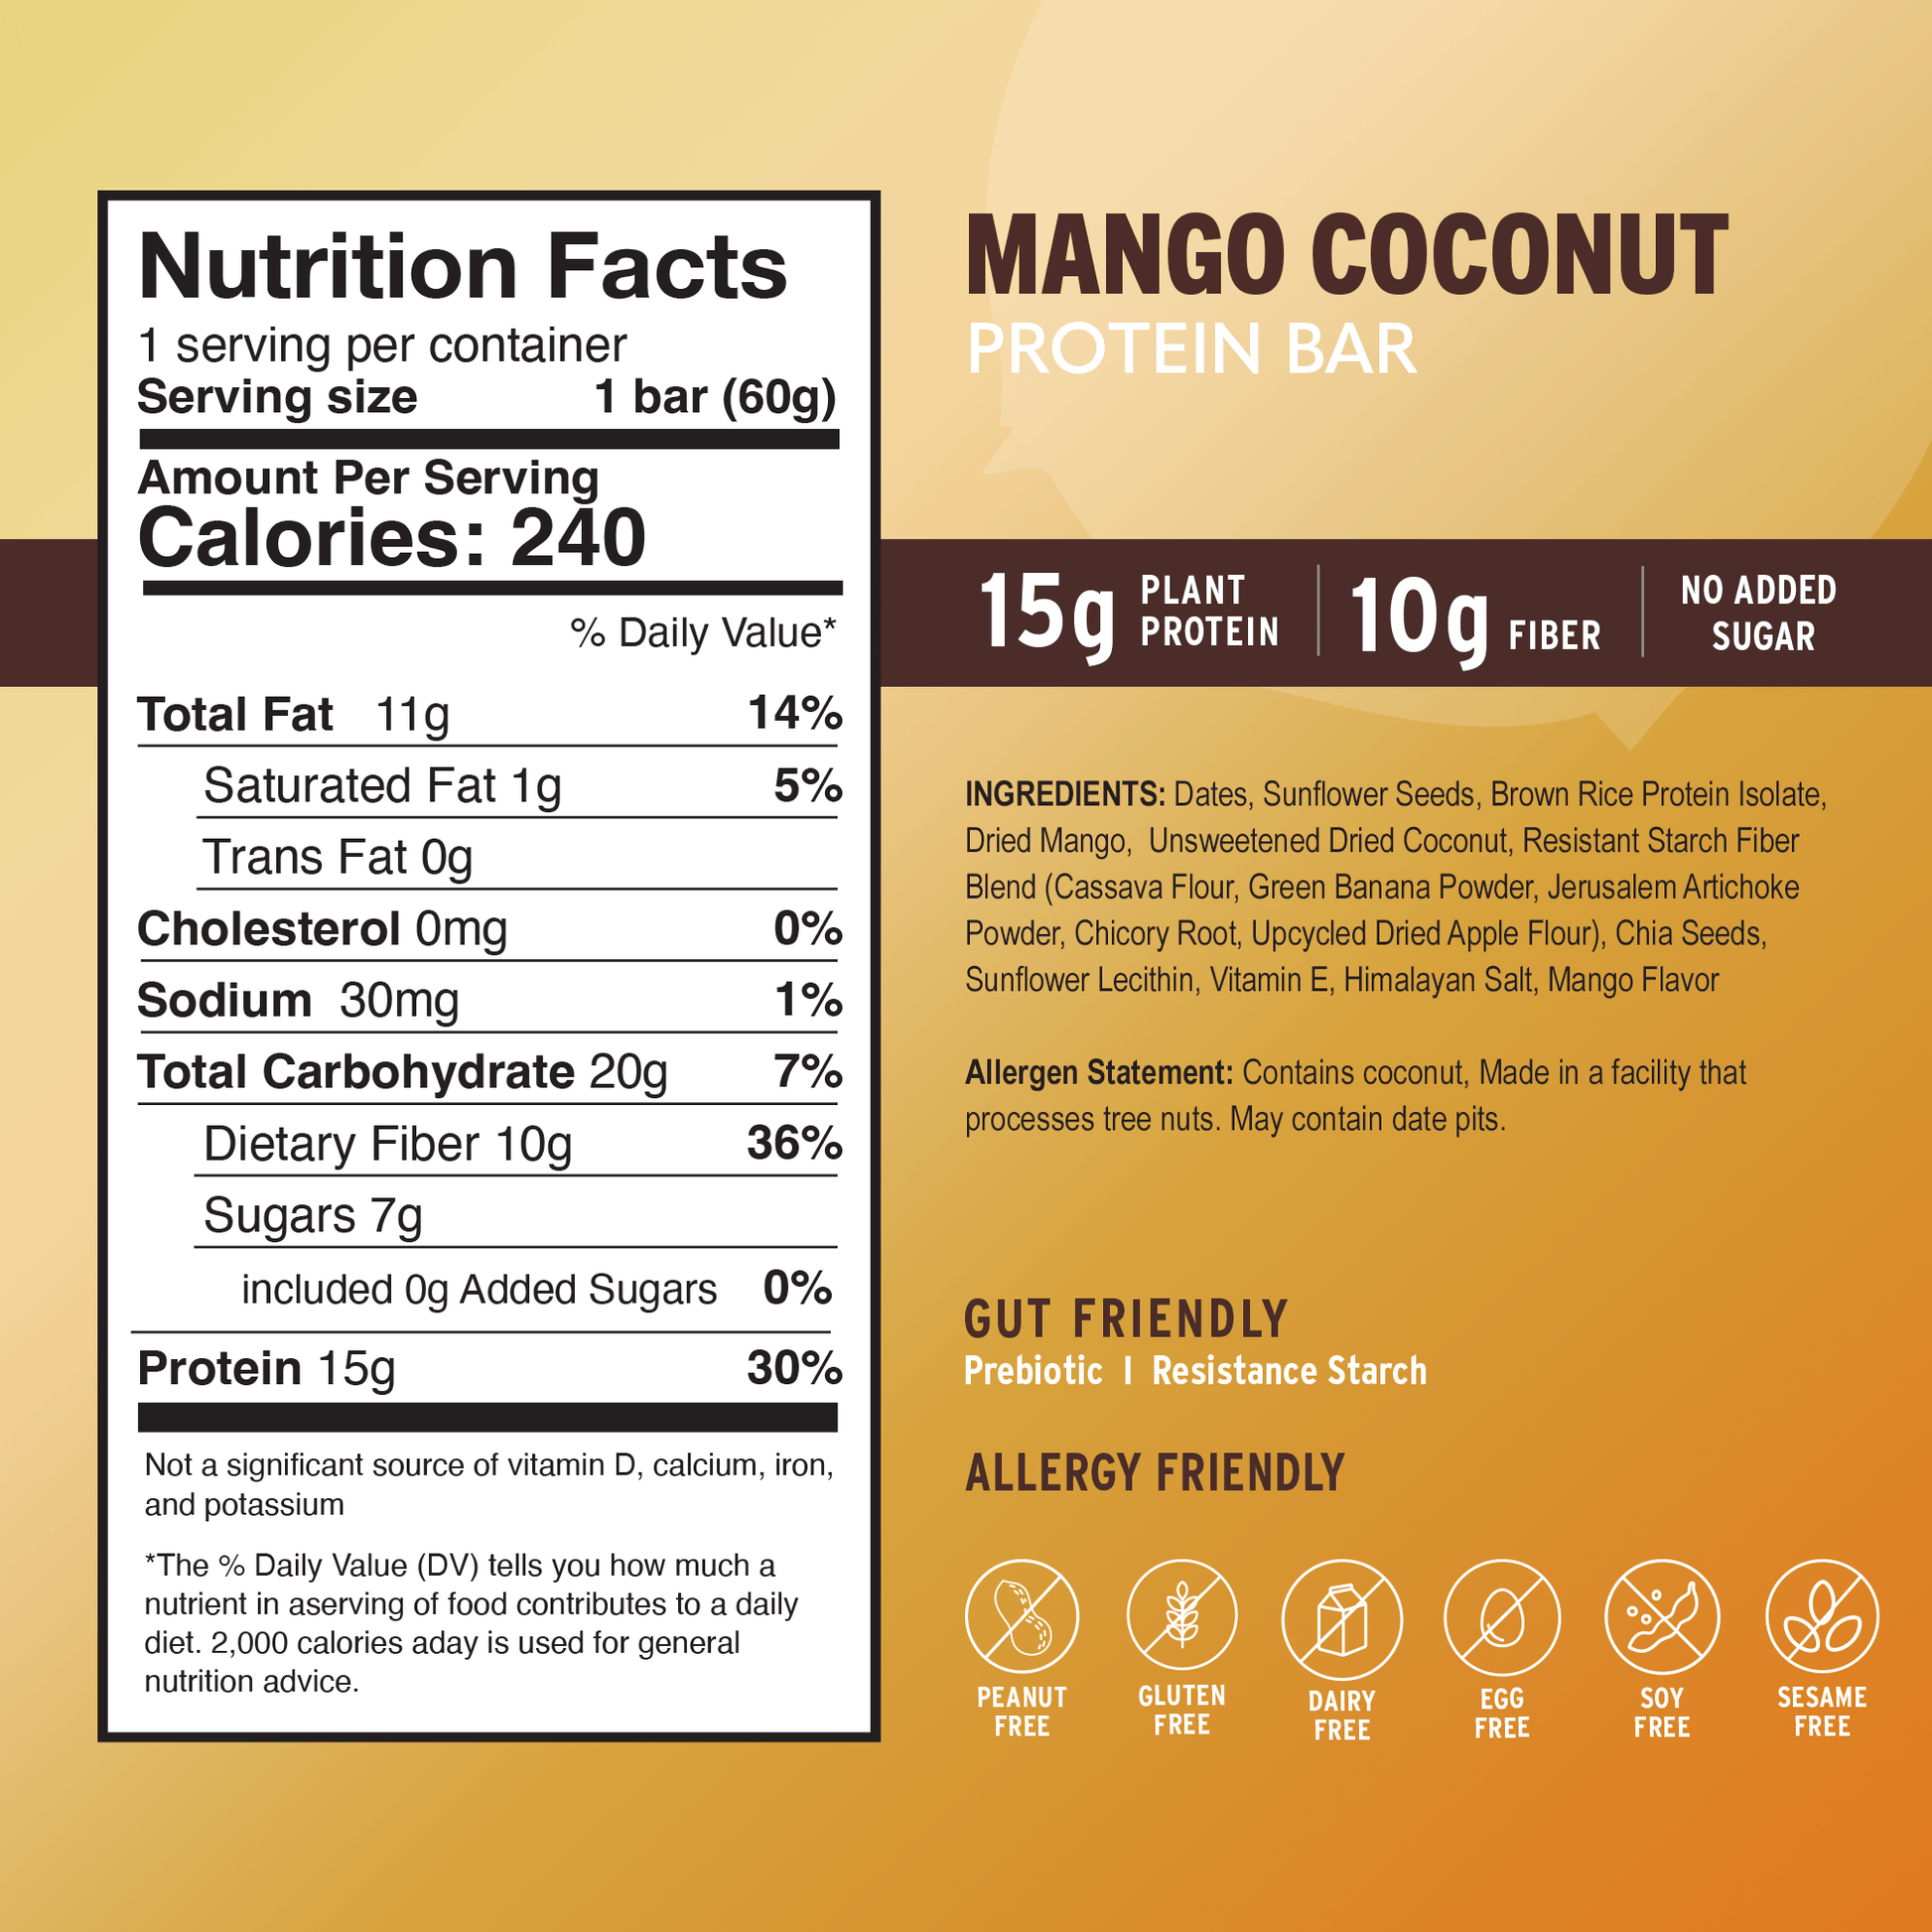 amrita-health-foods protein bars Mango Coconut